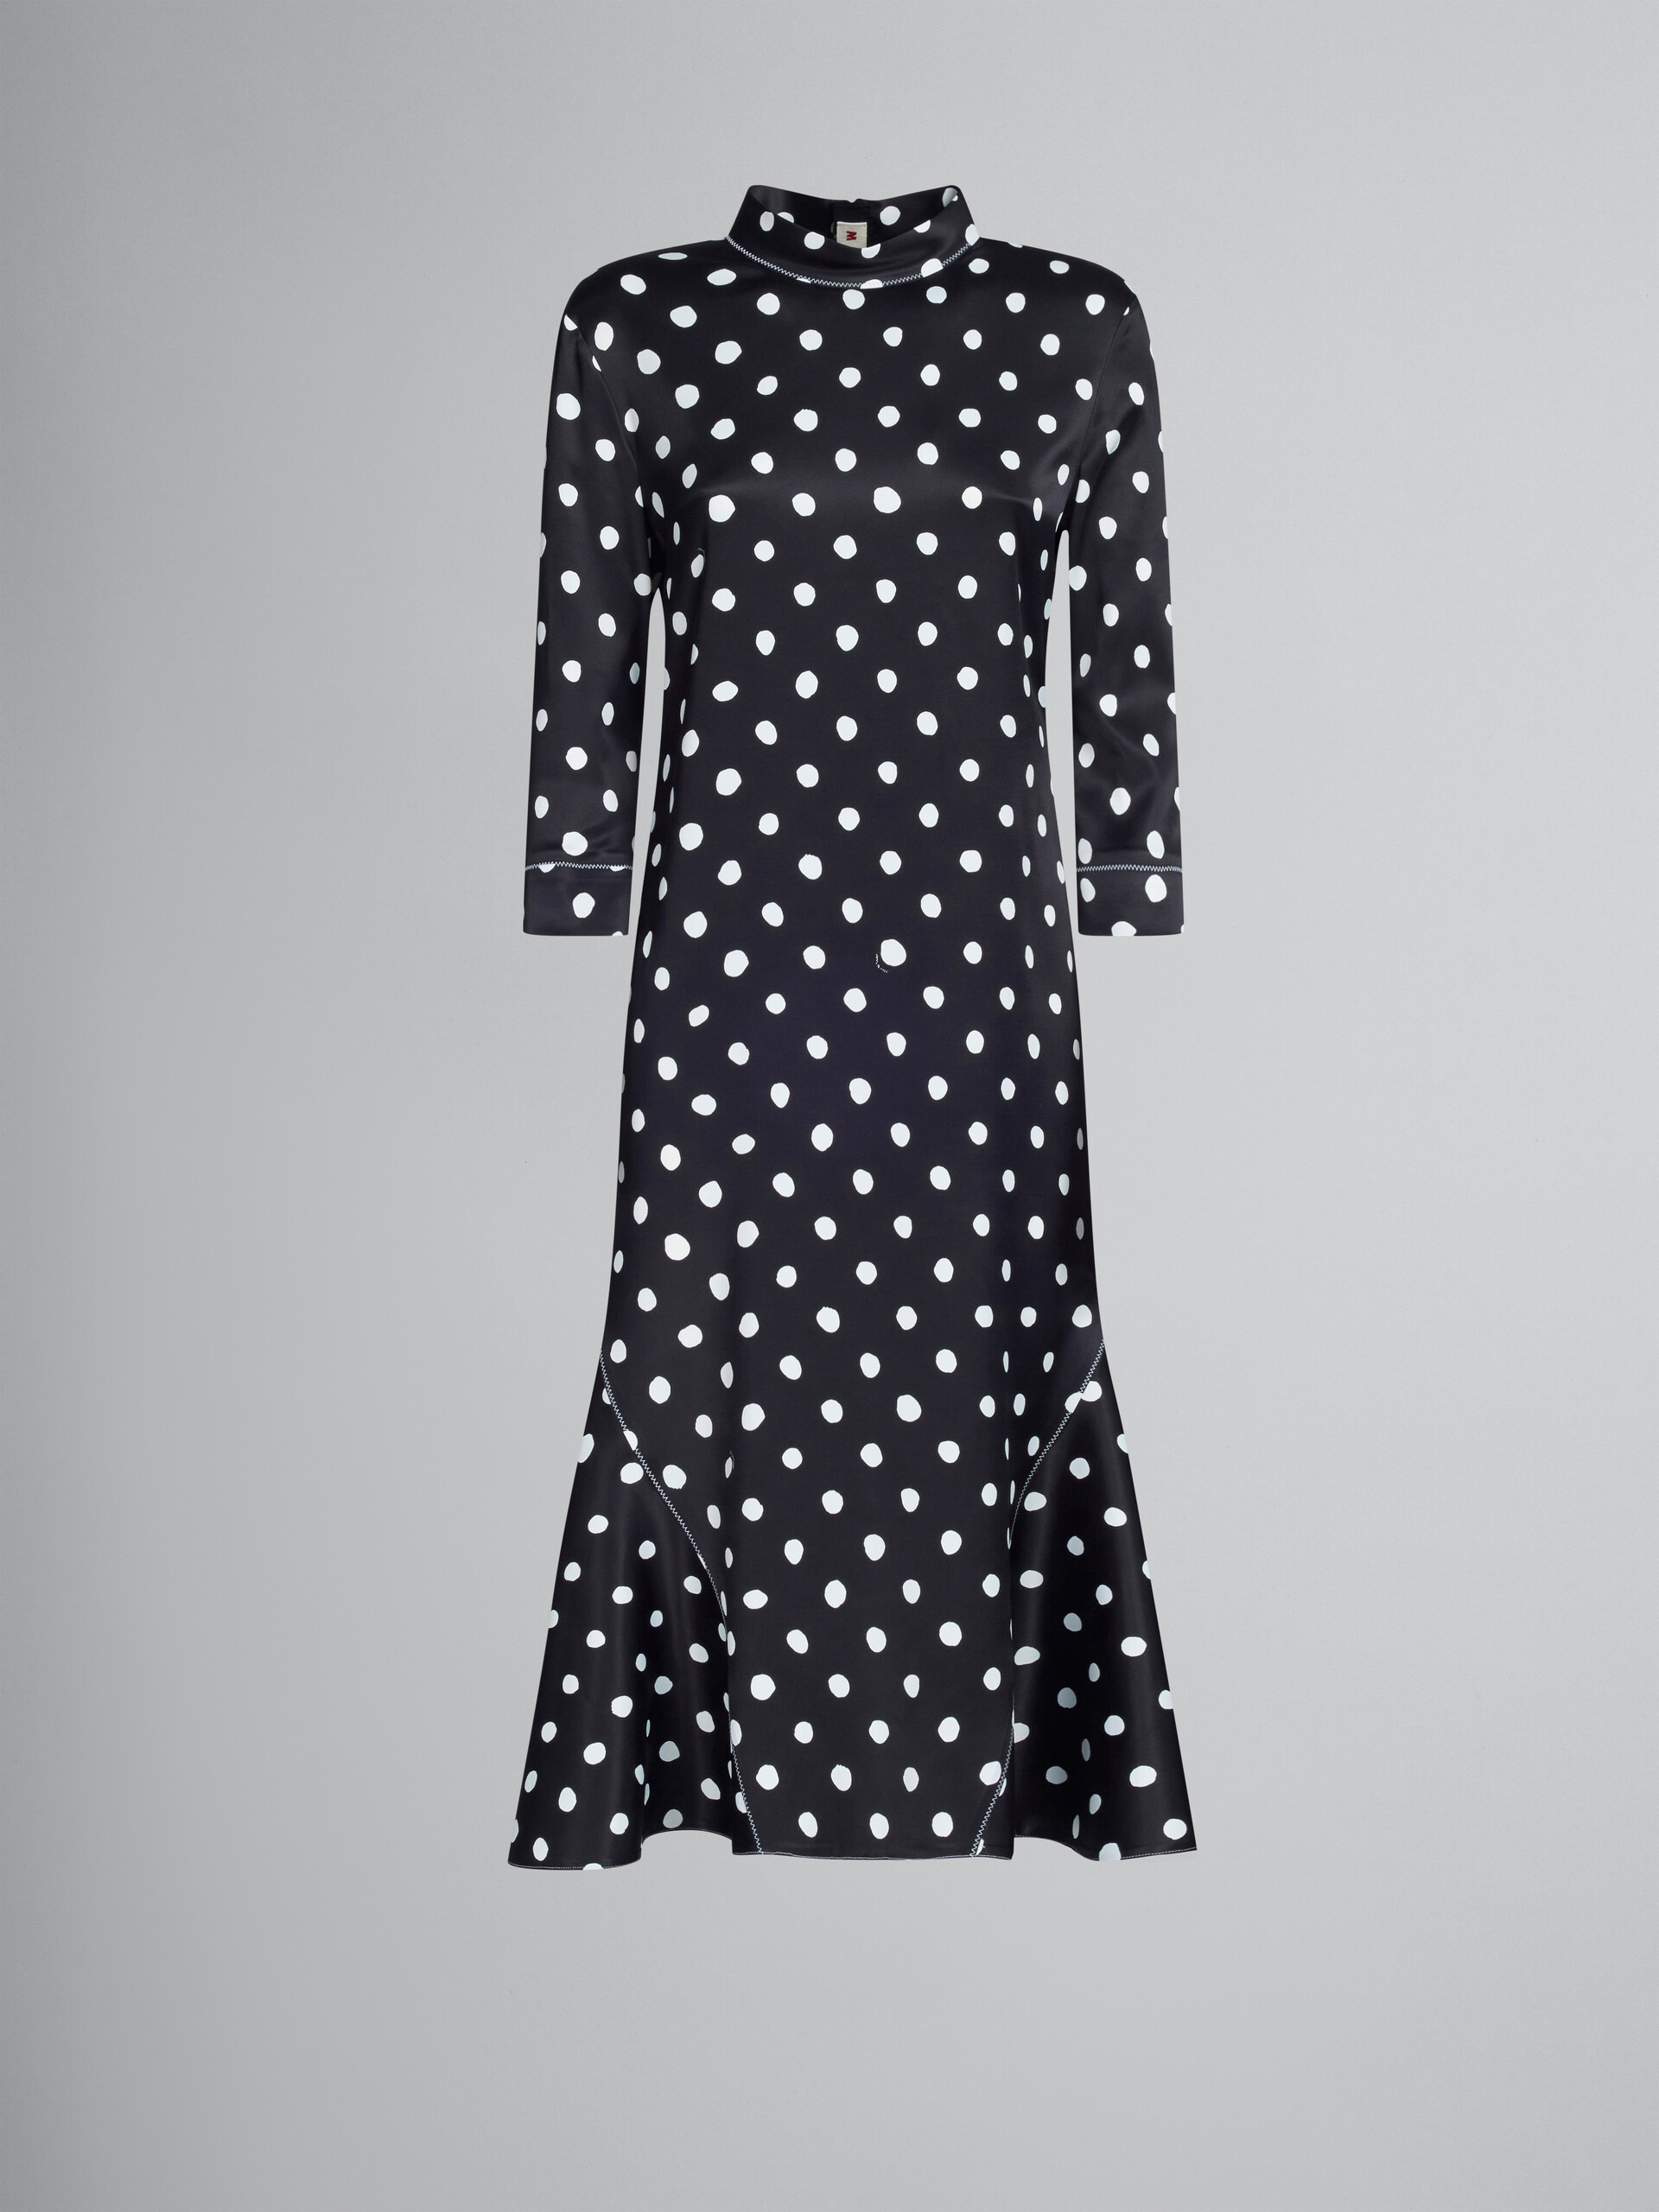 Black satin dress with polka dots - Dresses - Image 1